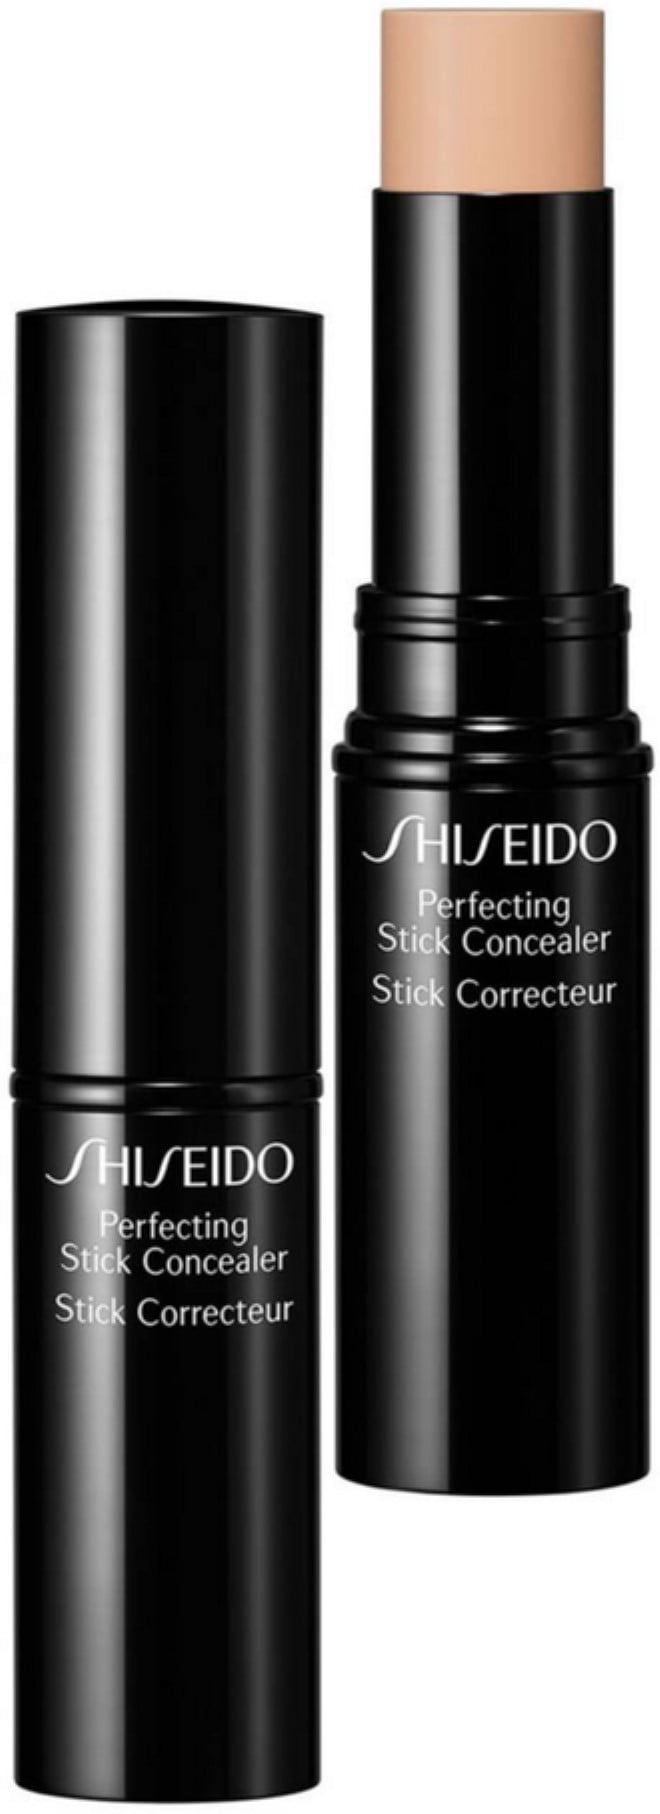 Тон в стике. Shiseido Stick concealer. Shiseido Perfecting Stick concealer 44. Shiseido корректор-стик оттенки. Shiseido консилер на лице.